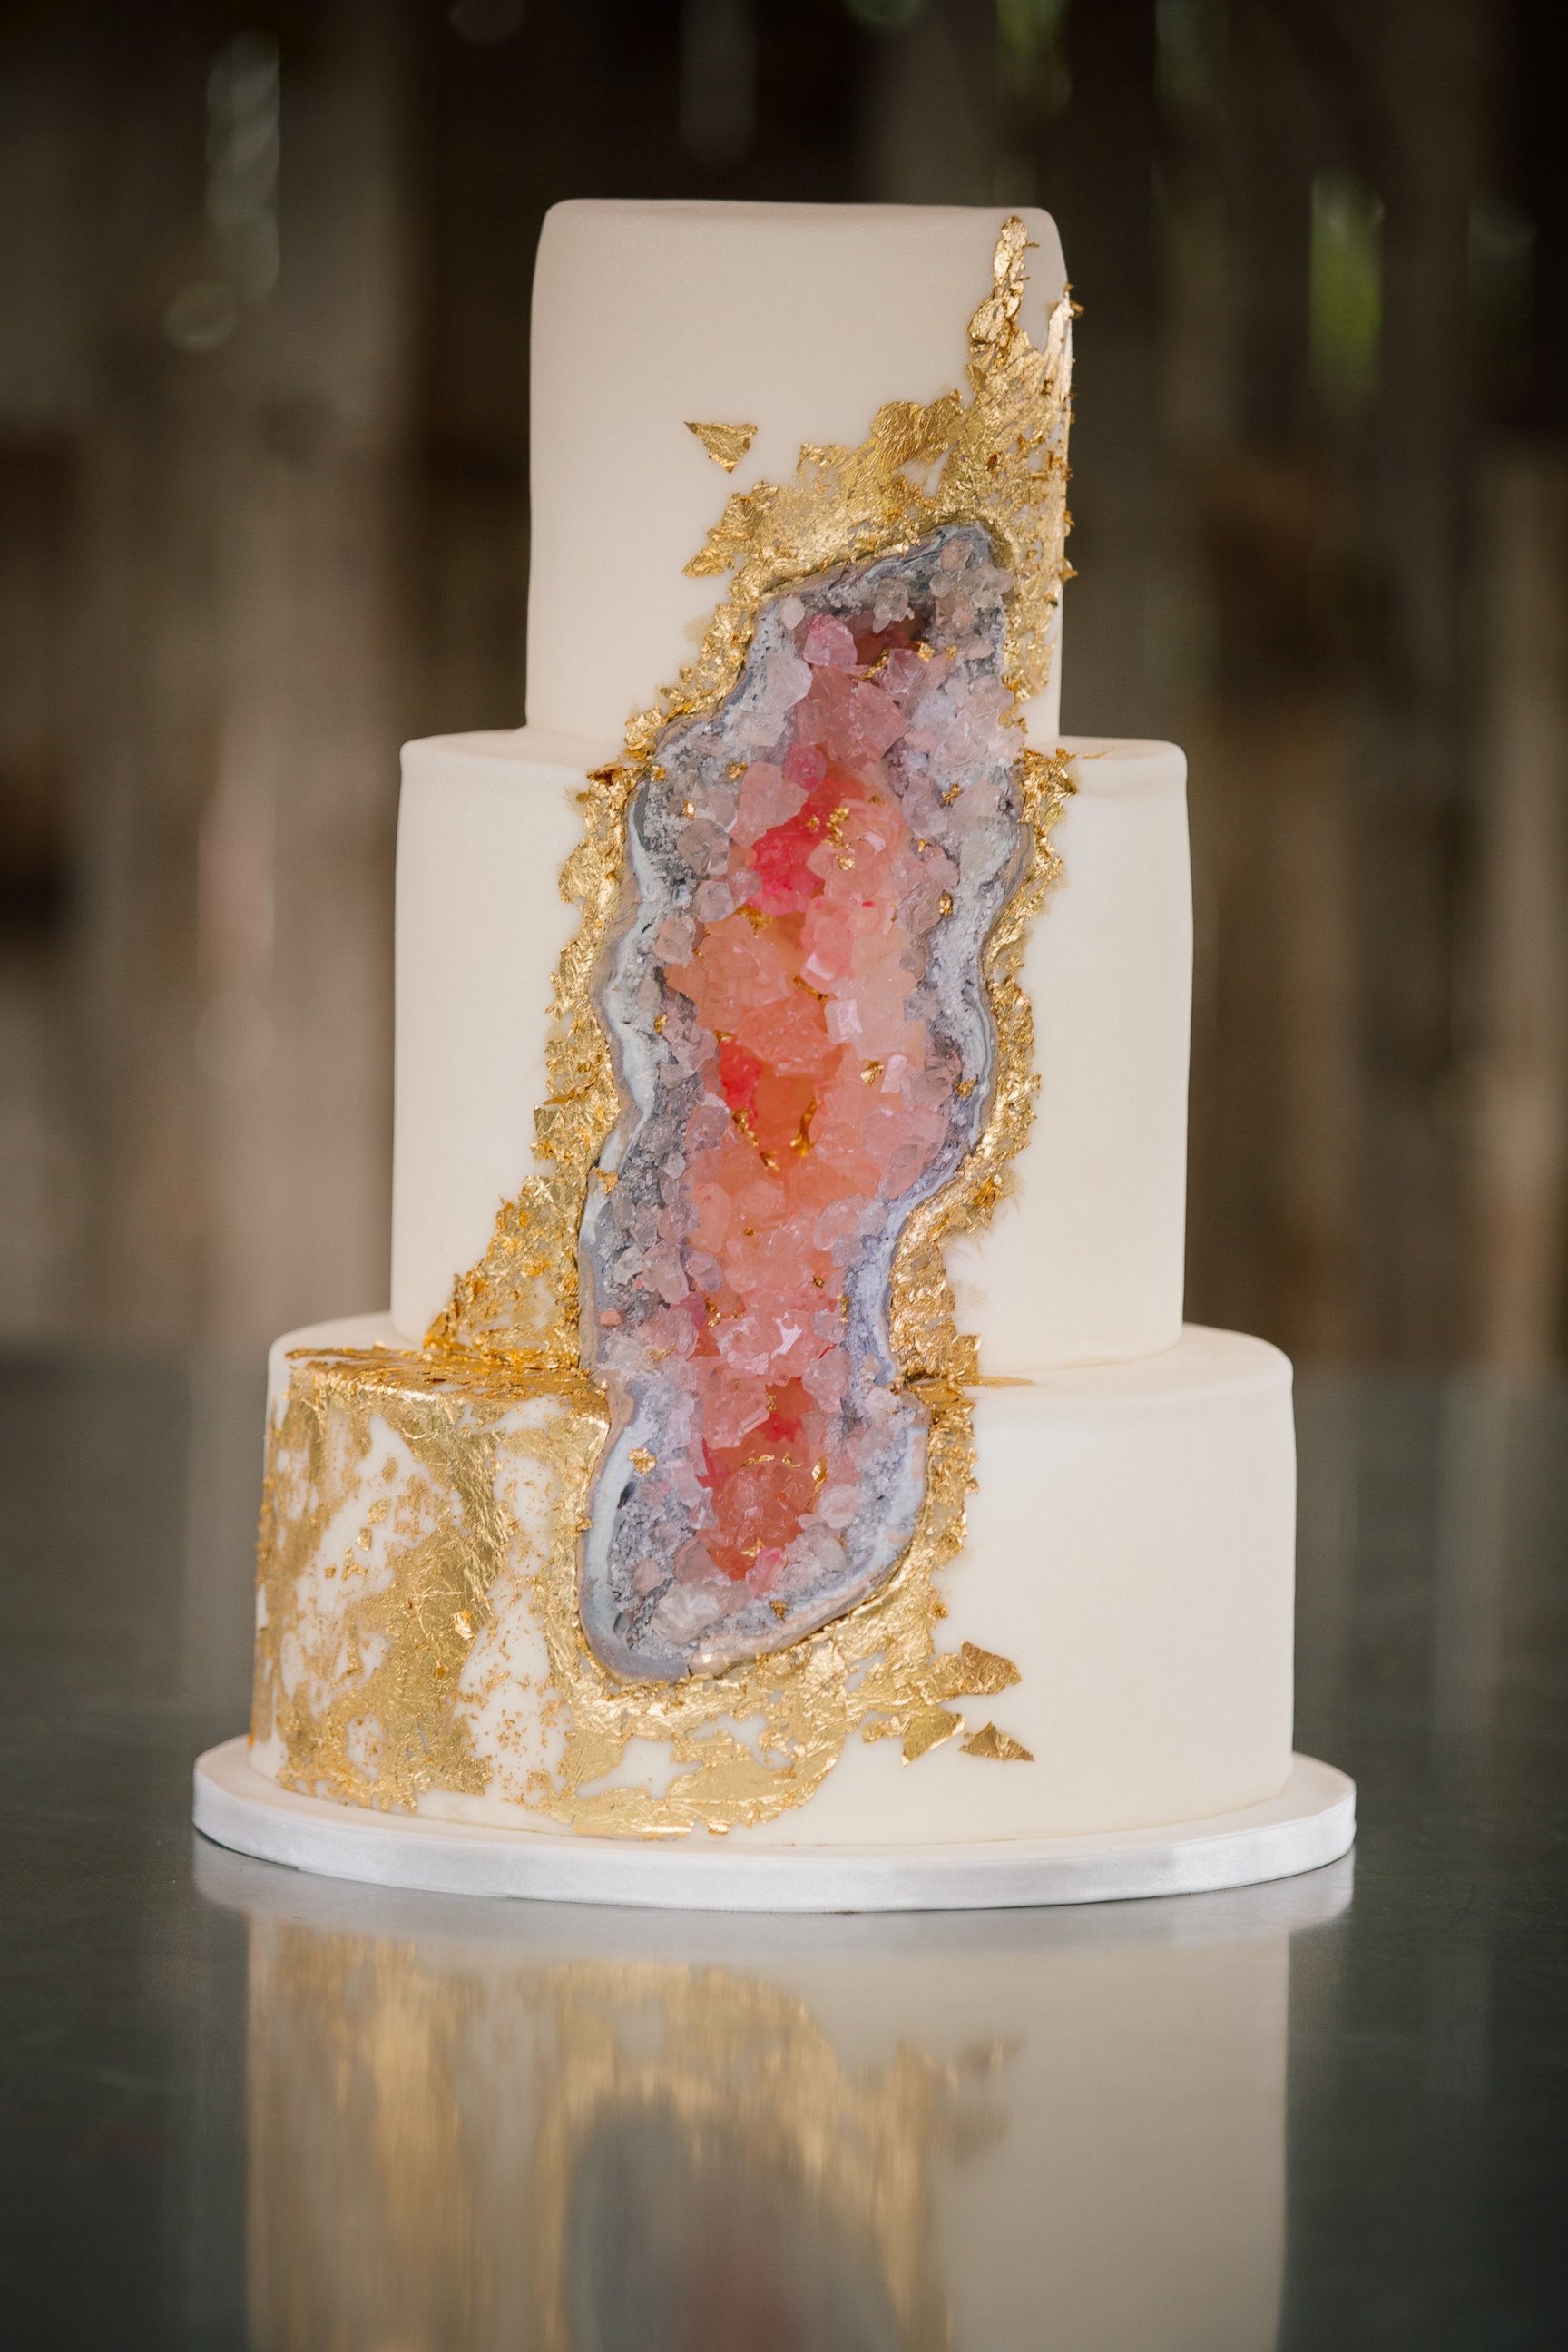 PHOTO: Geode cake created by award winning cake designer Carrie Biggers-Burnett.